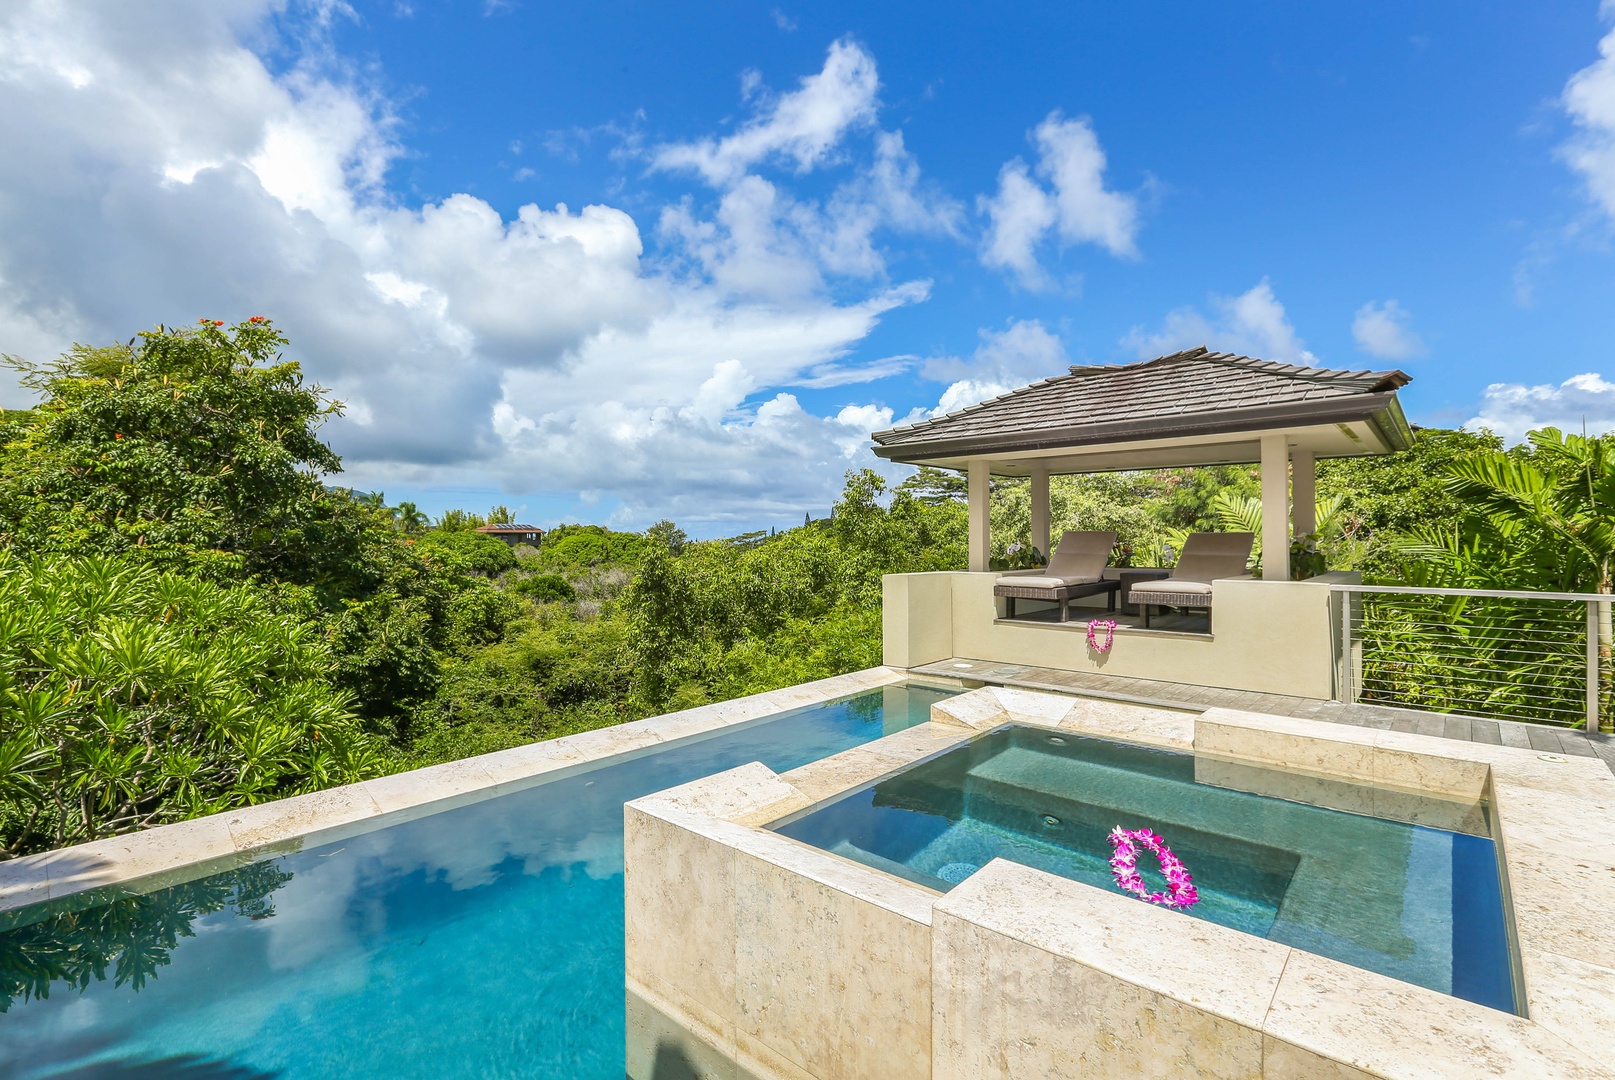 Princeville Vacation Rentals, Laulea Kailani Villa (KAUAI) - Pool and spa